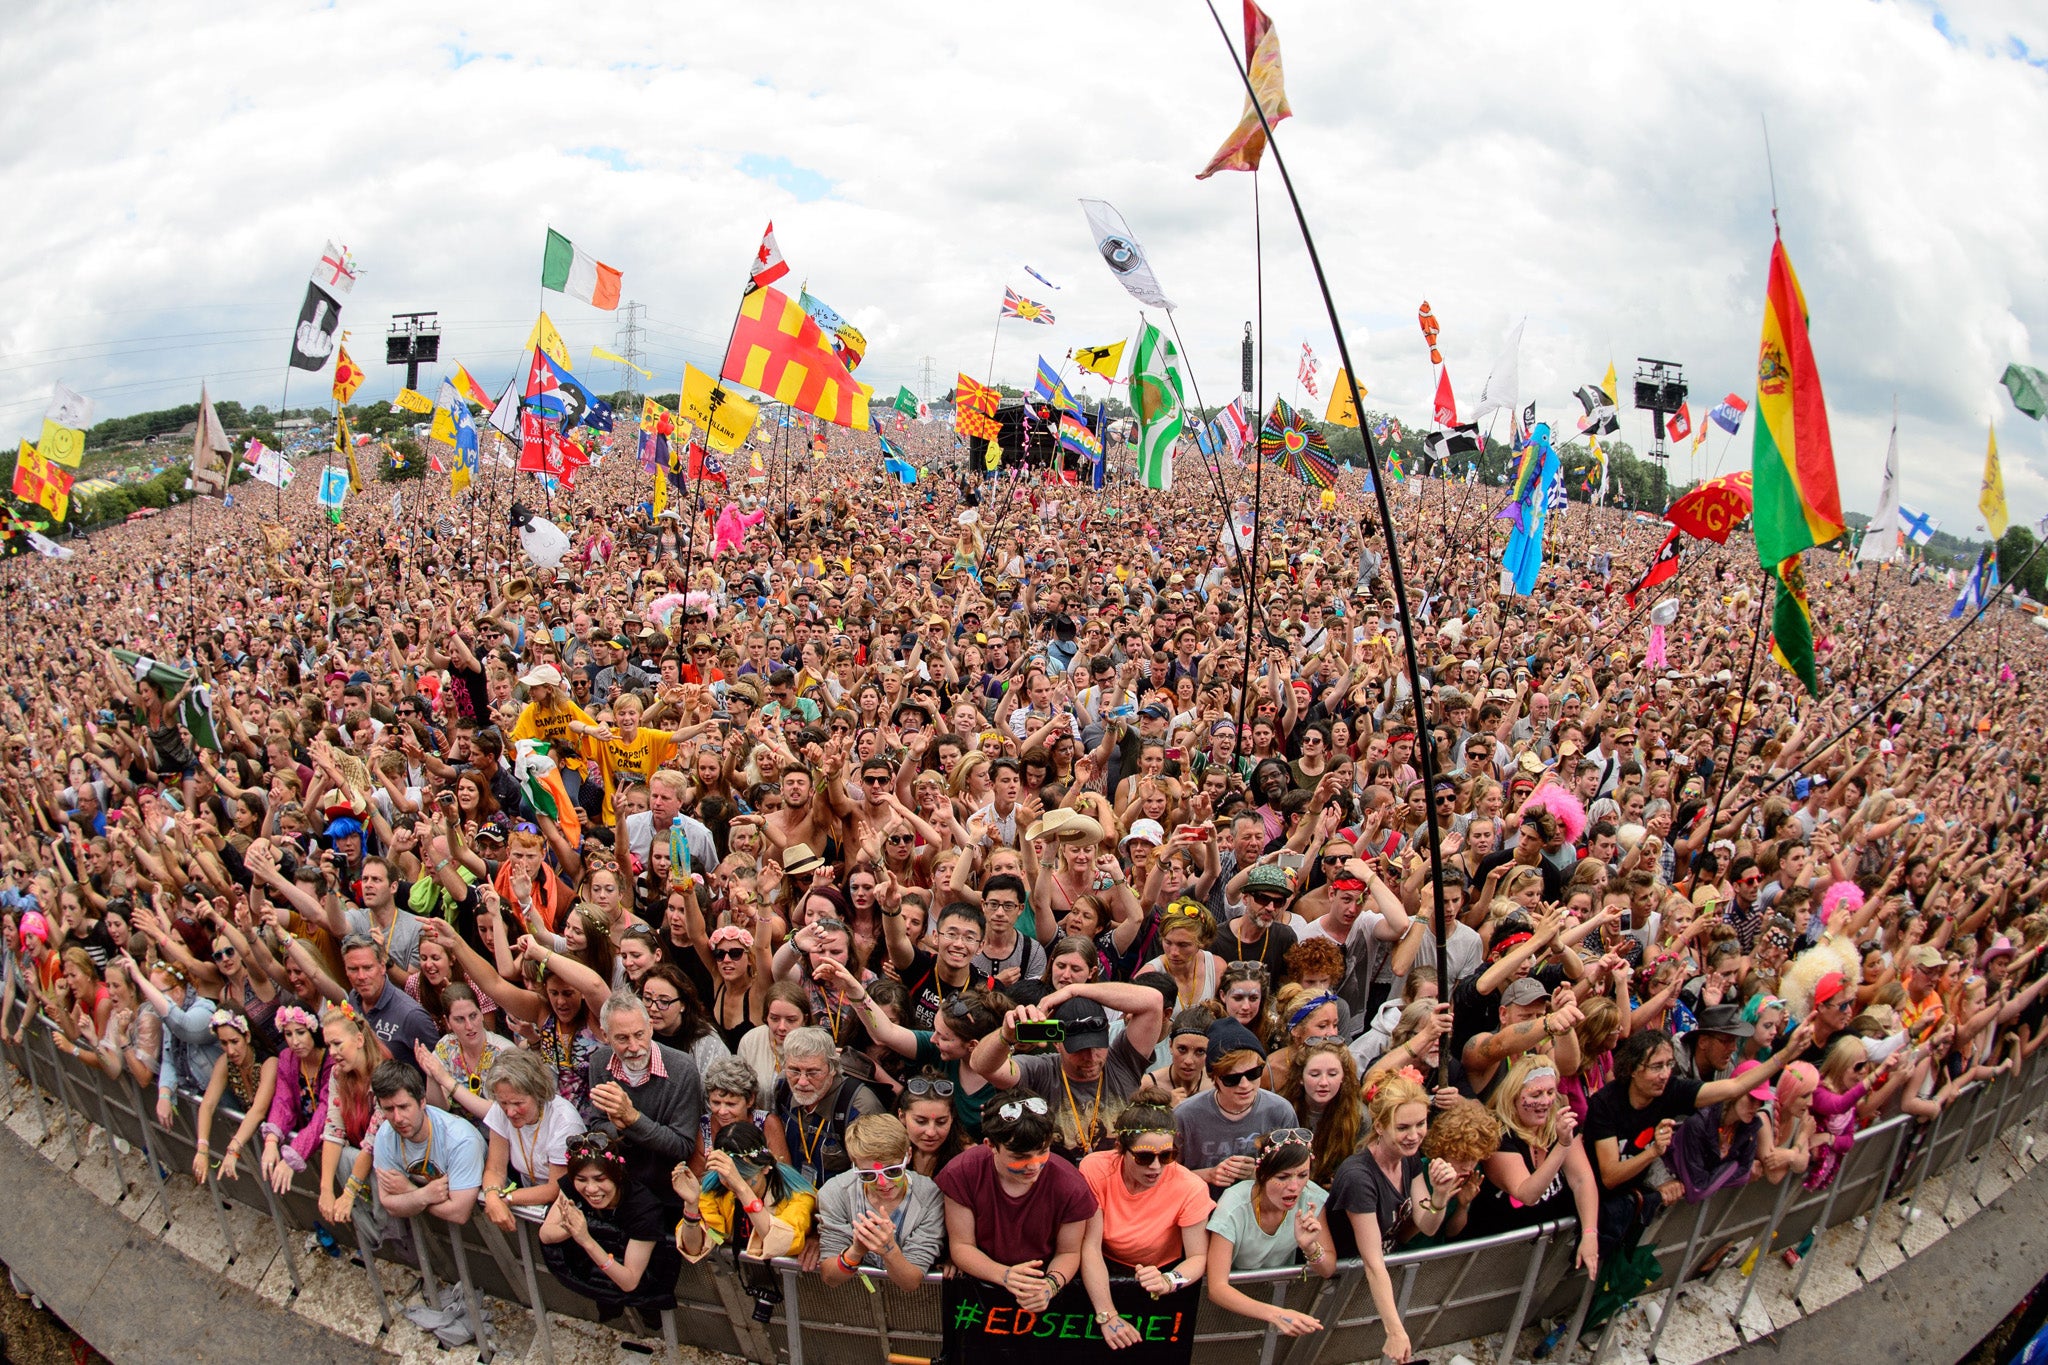 Festival-goers soak up the atmosphere at Glastonbury